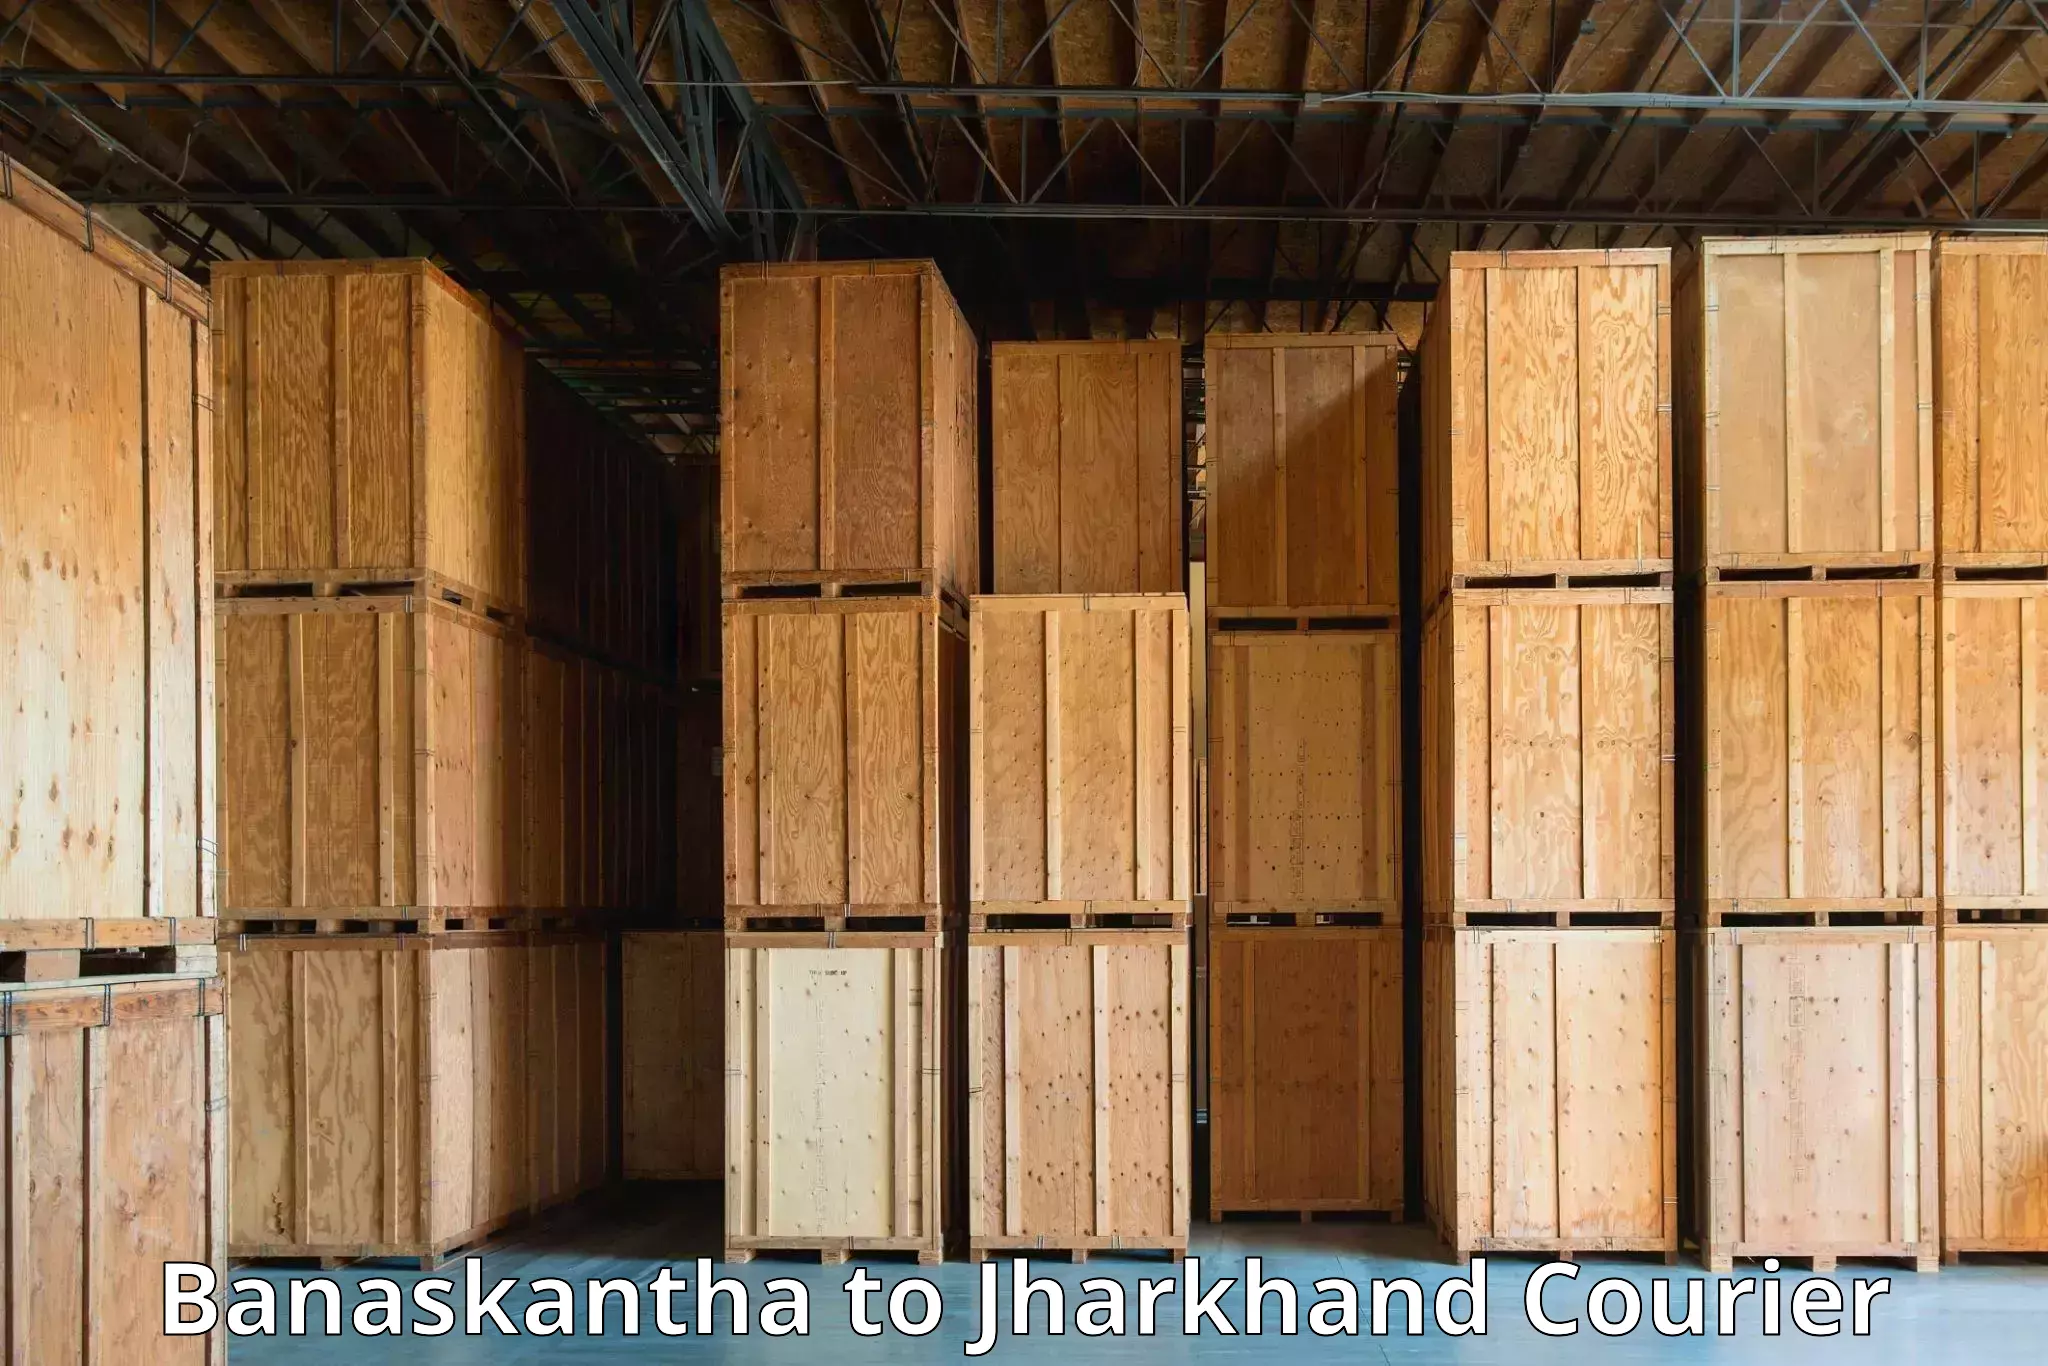 Cost-effective courier options Banaskantha to Jamshedpur